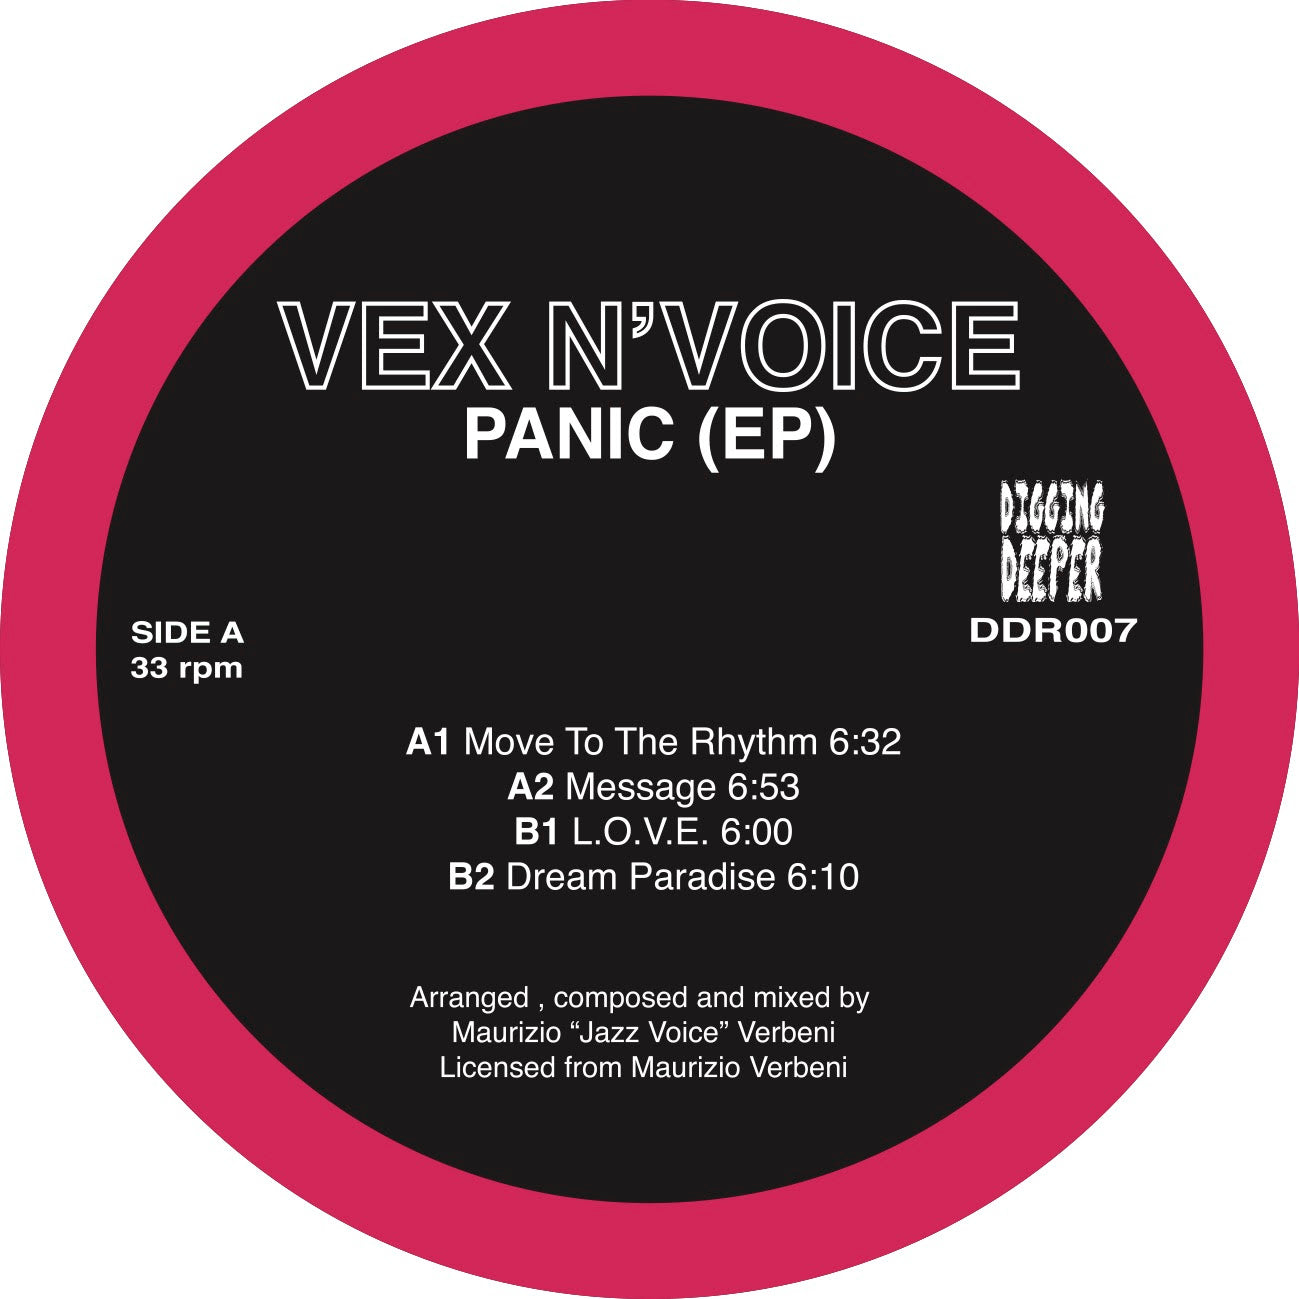 Vex N' Voice - Panic (EP)